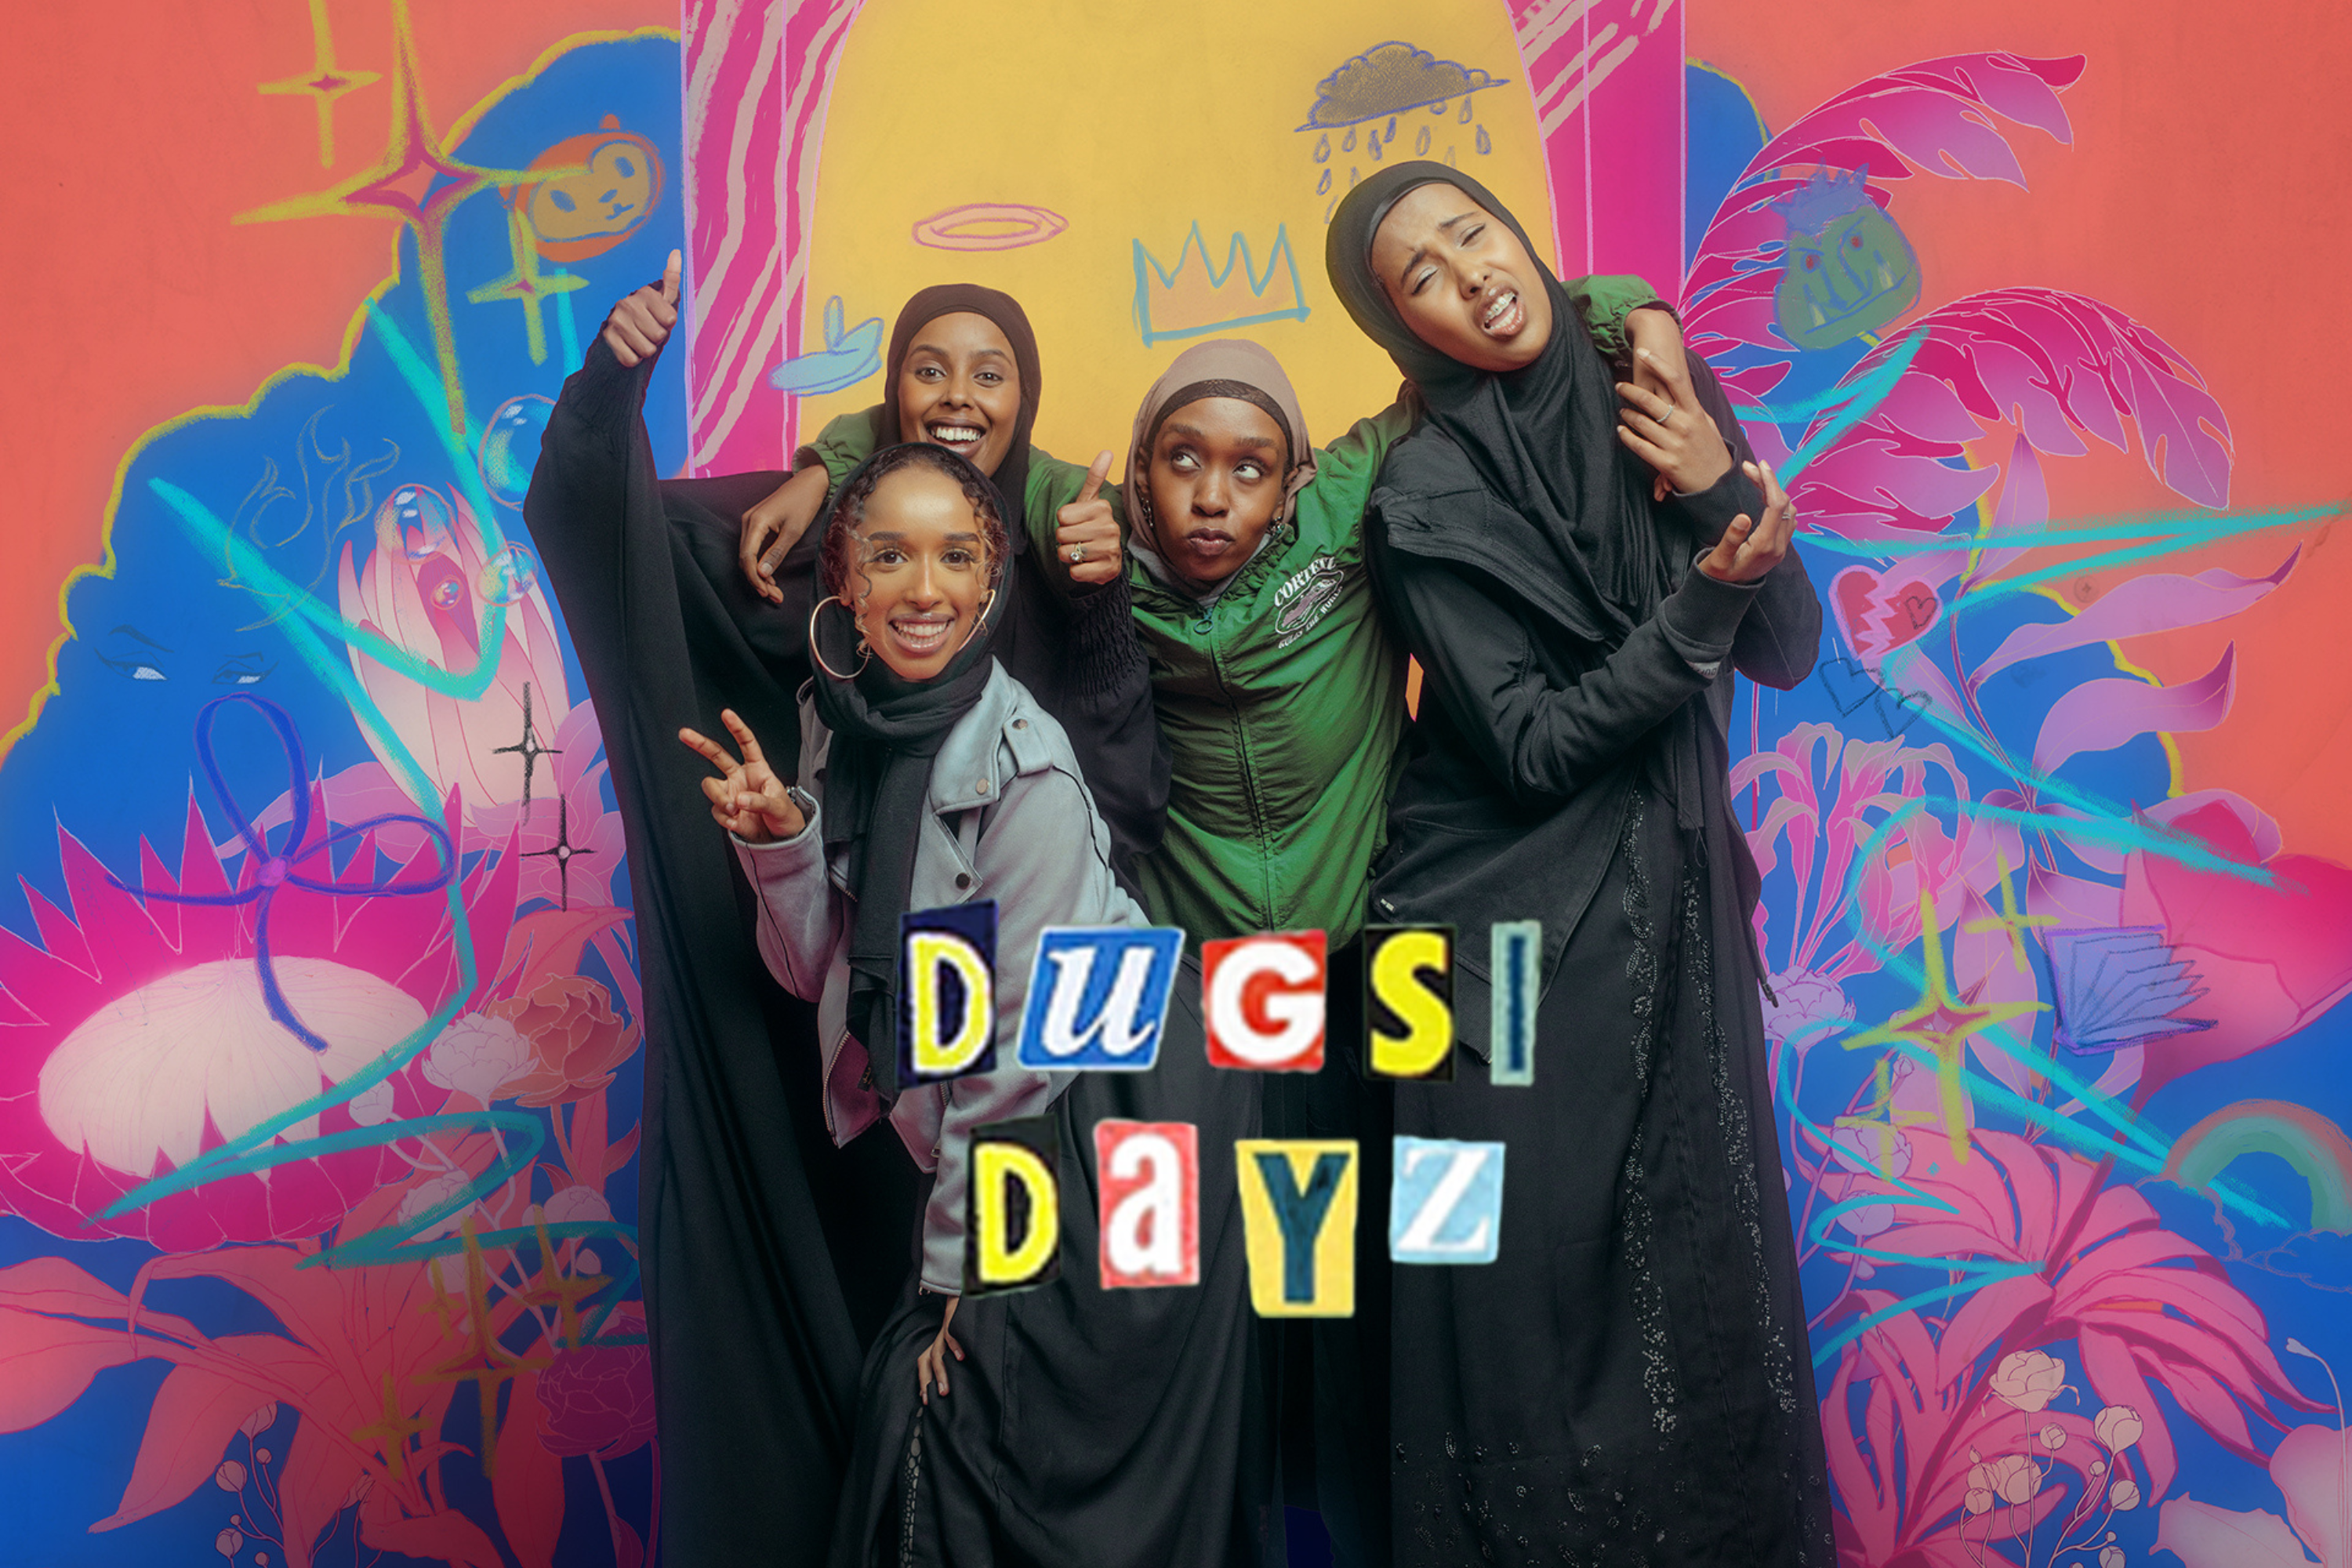 Dugsi-Dayz-title.png